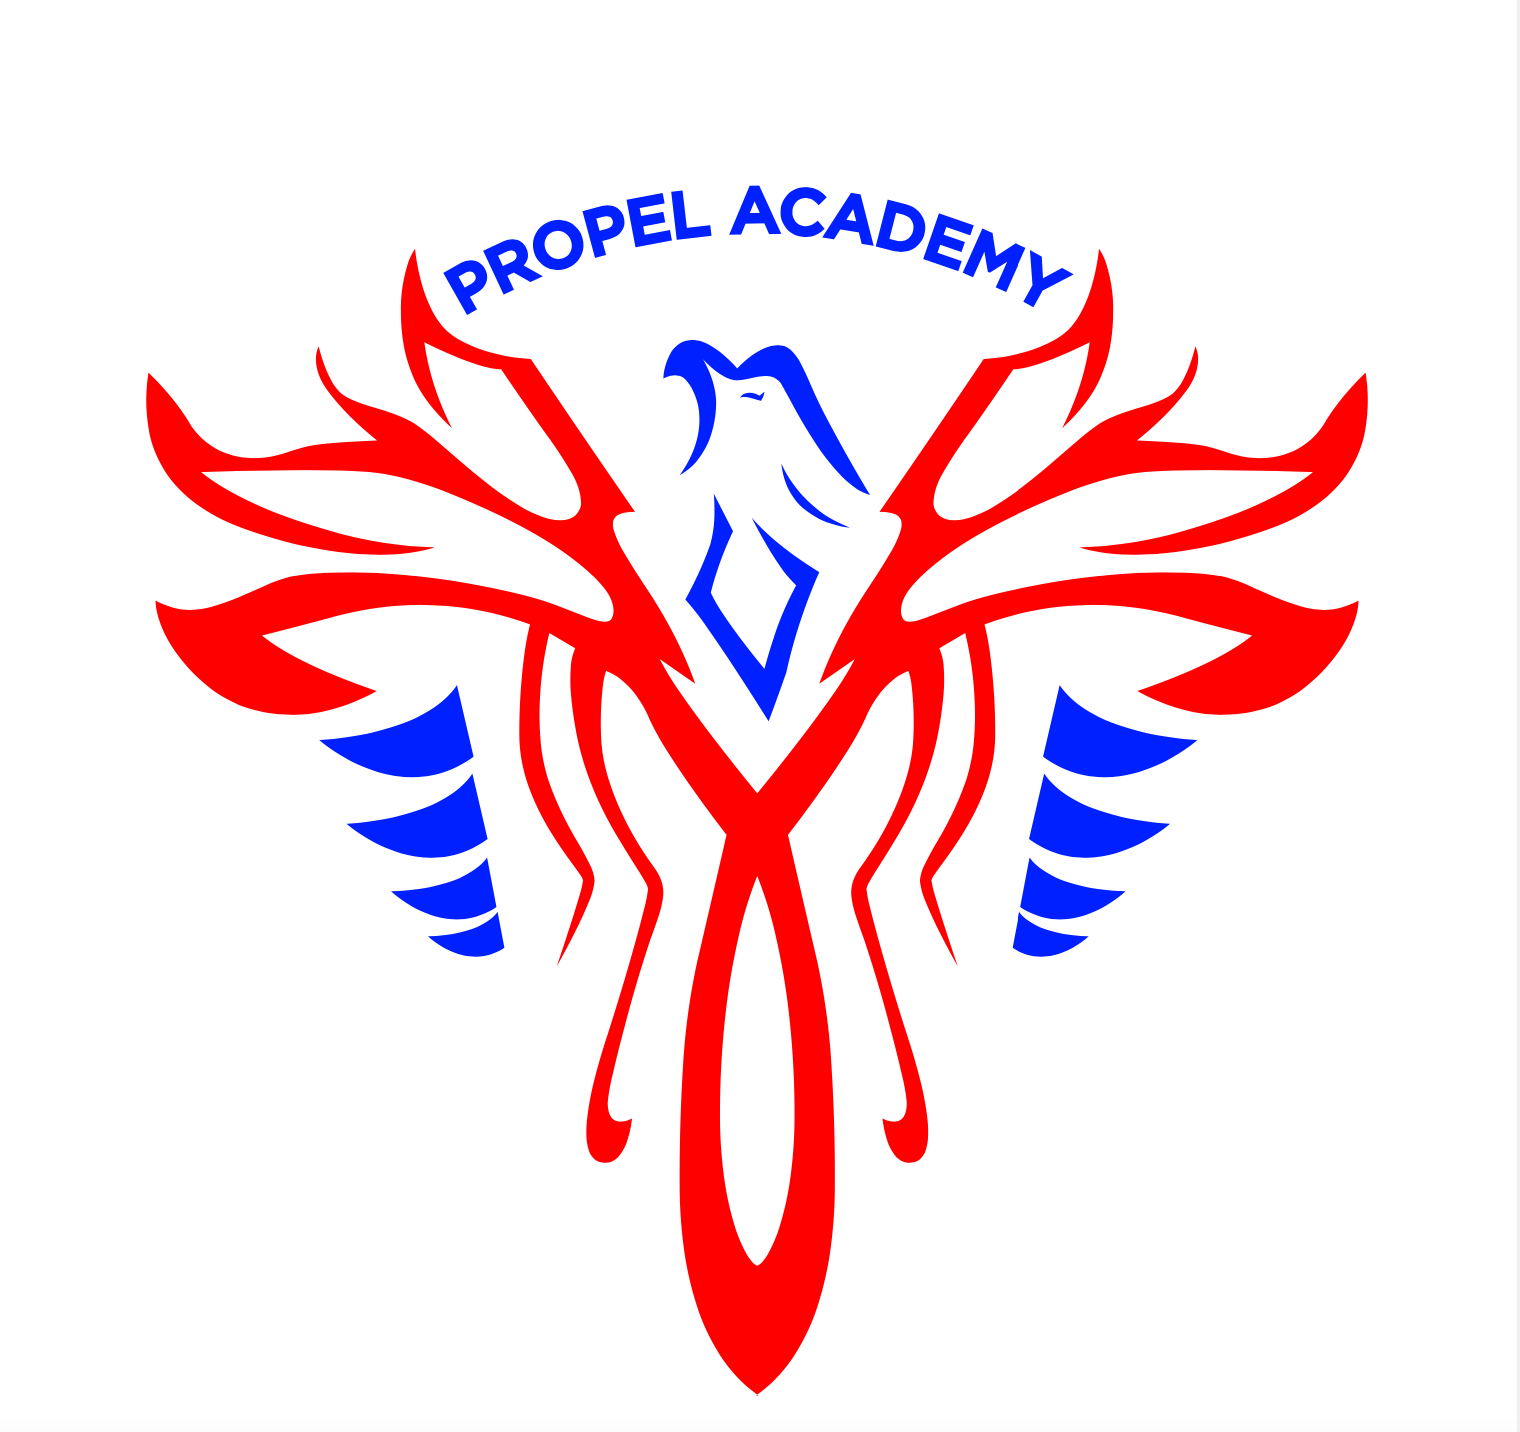 The Northeast Community Propel Academy